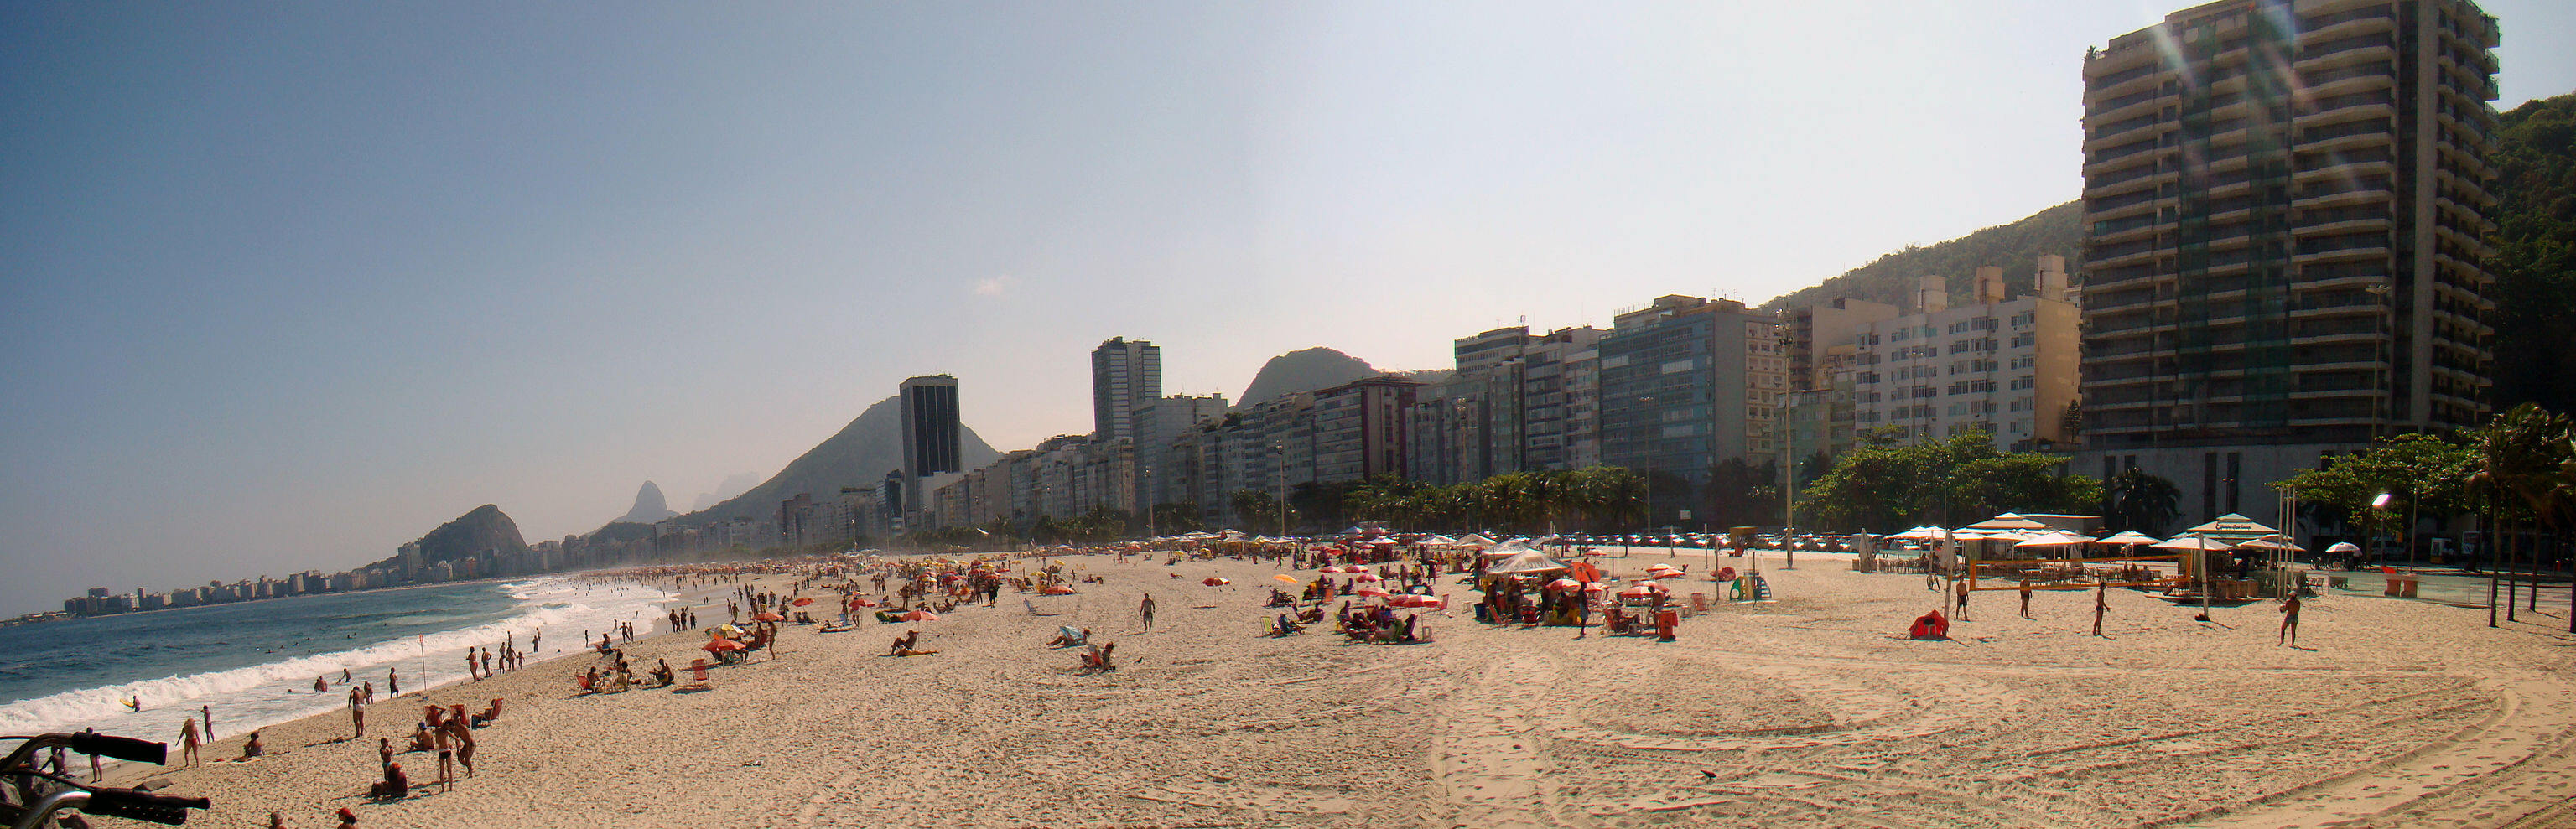 A praia de Copacabana localiza-se no bairro de mesmo nome, na zona Sul da cidade do Rio de Janeiro, no Brasil.